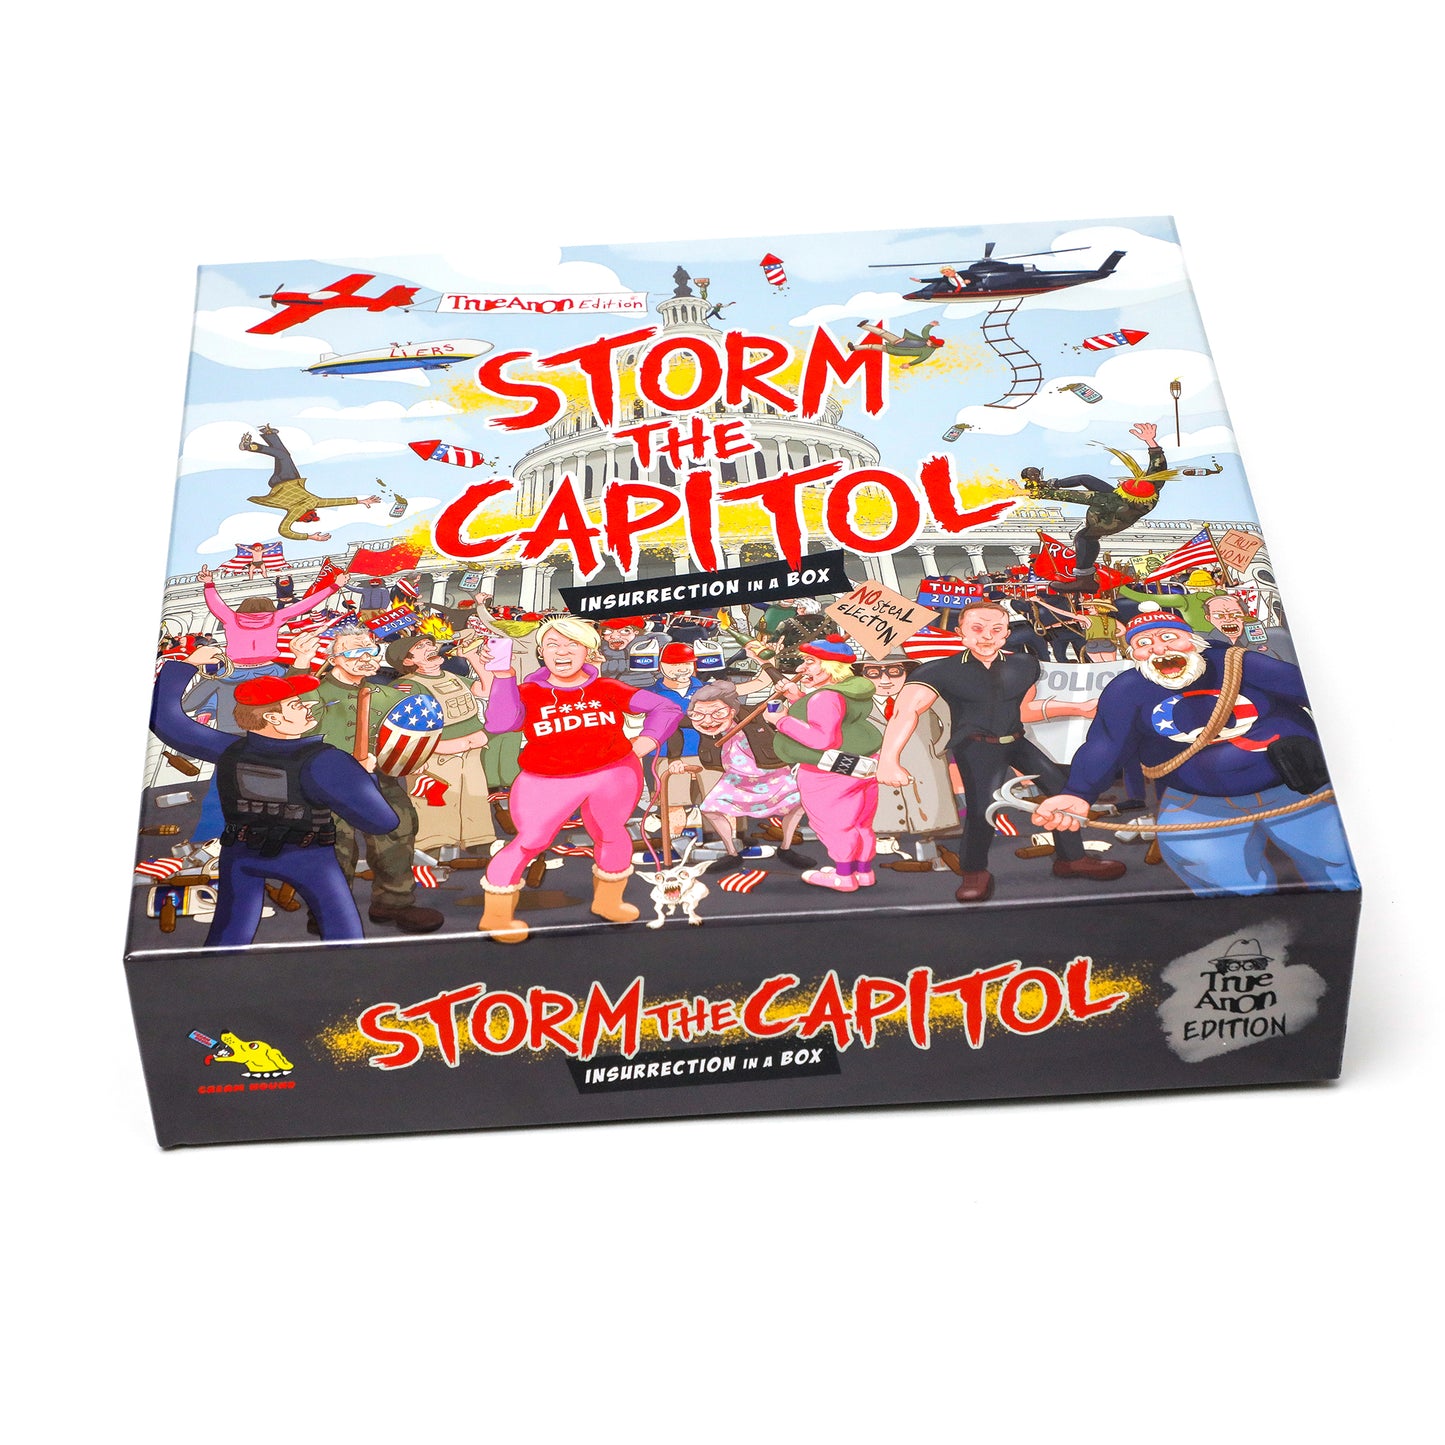 Storm The Capitol — TrueAnon Edition